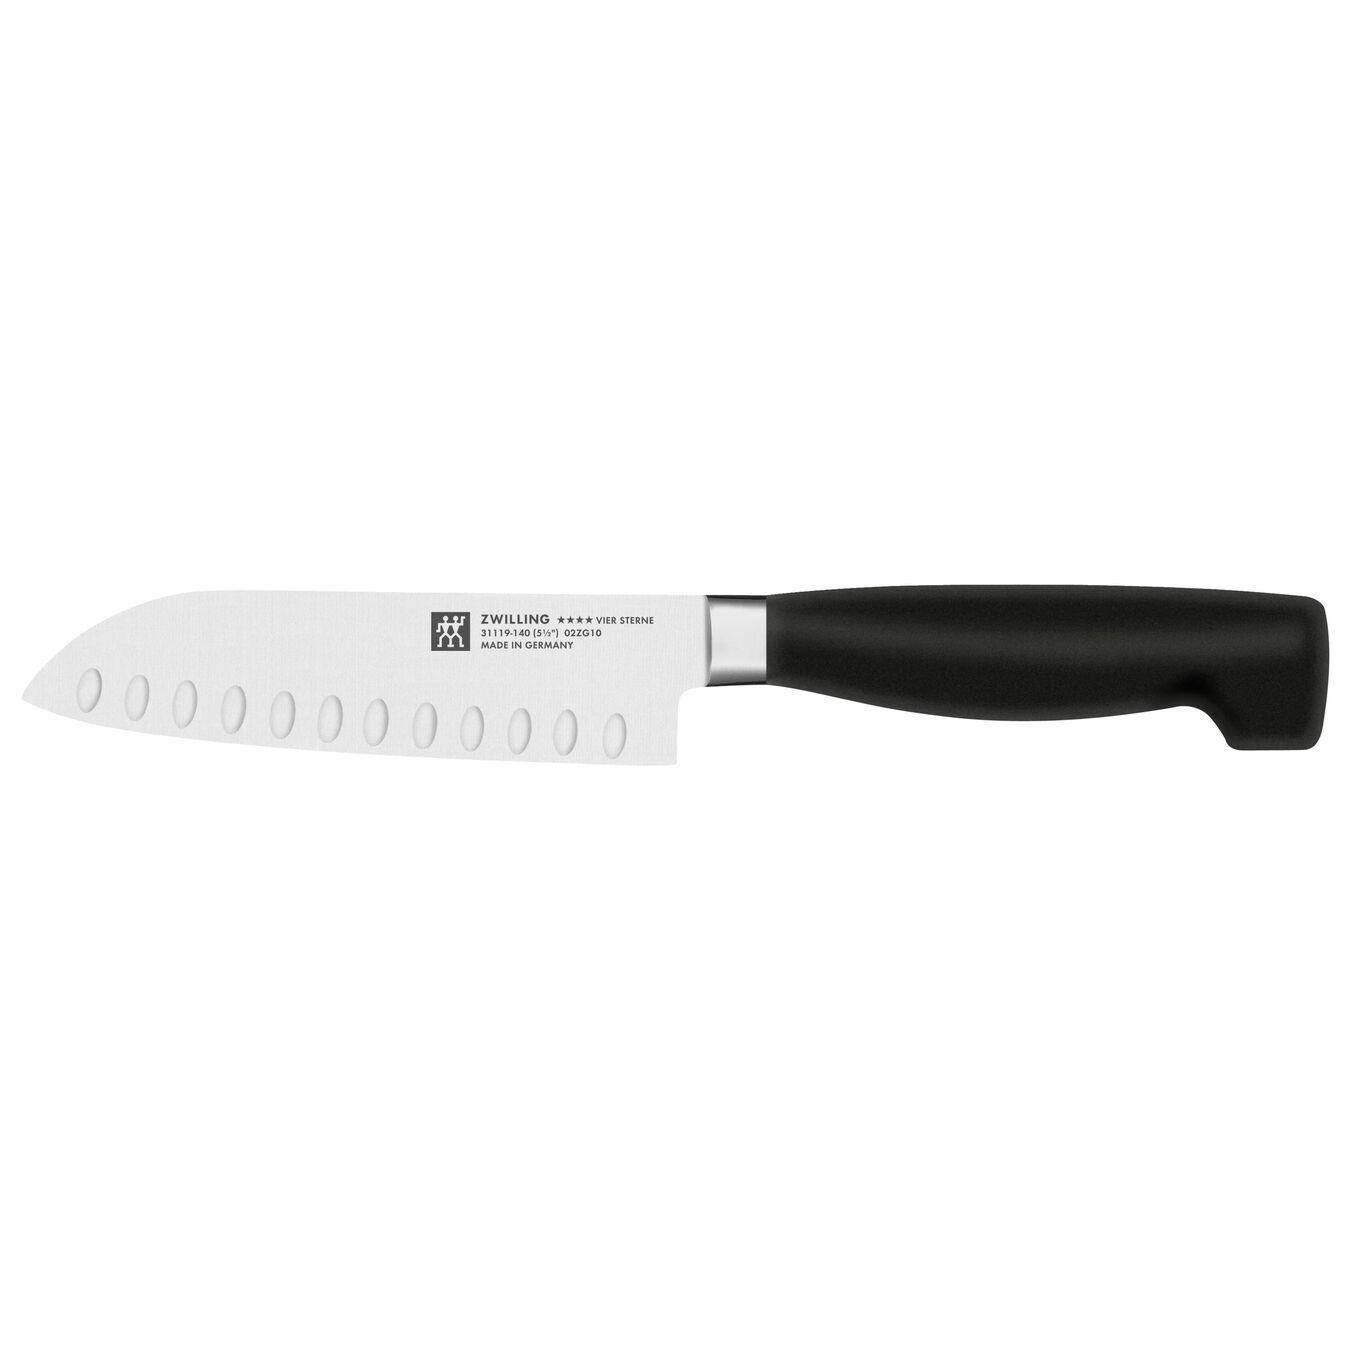 5.5-inch, Hollow Edge Santoku Knife,,large 1